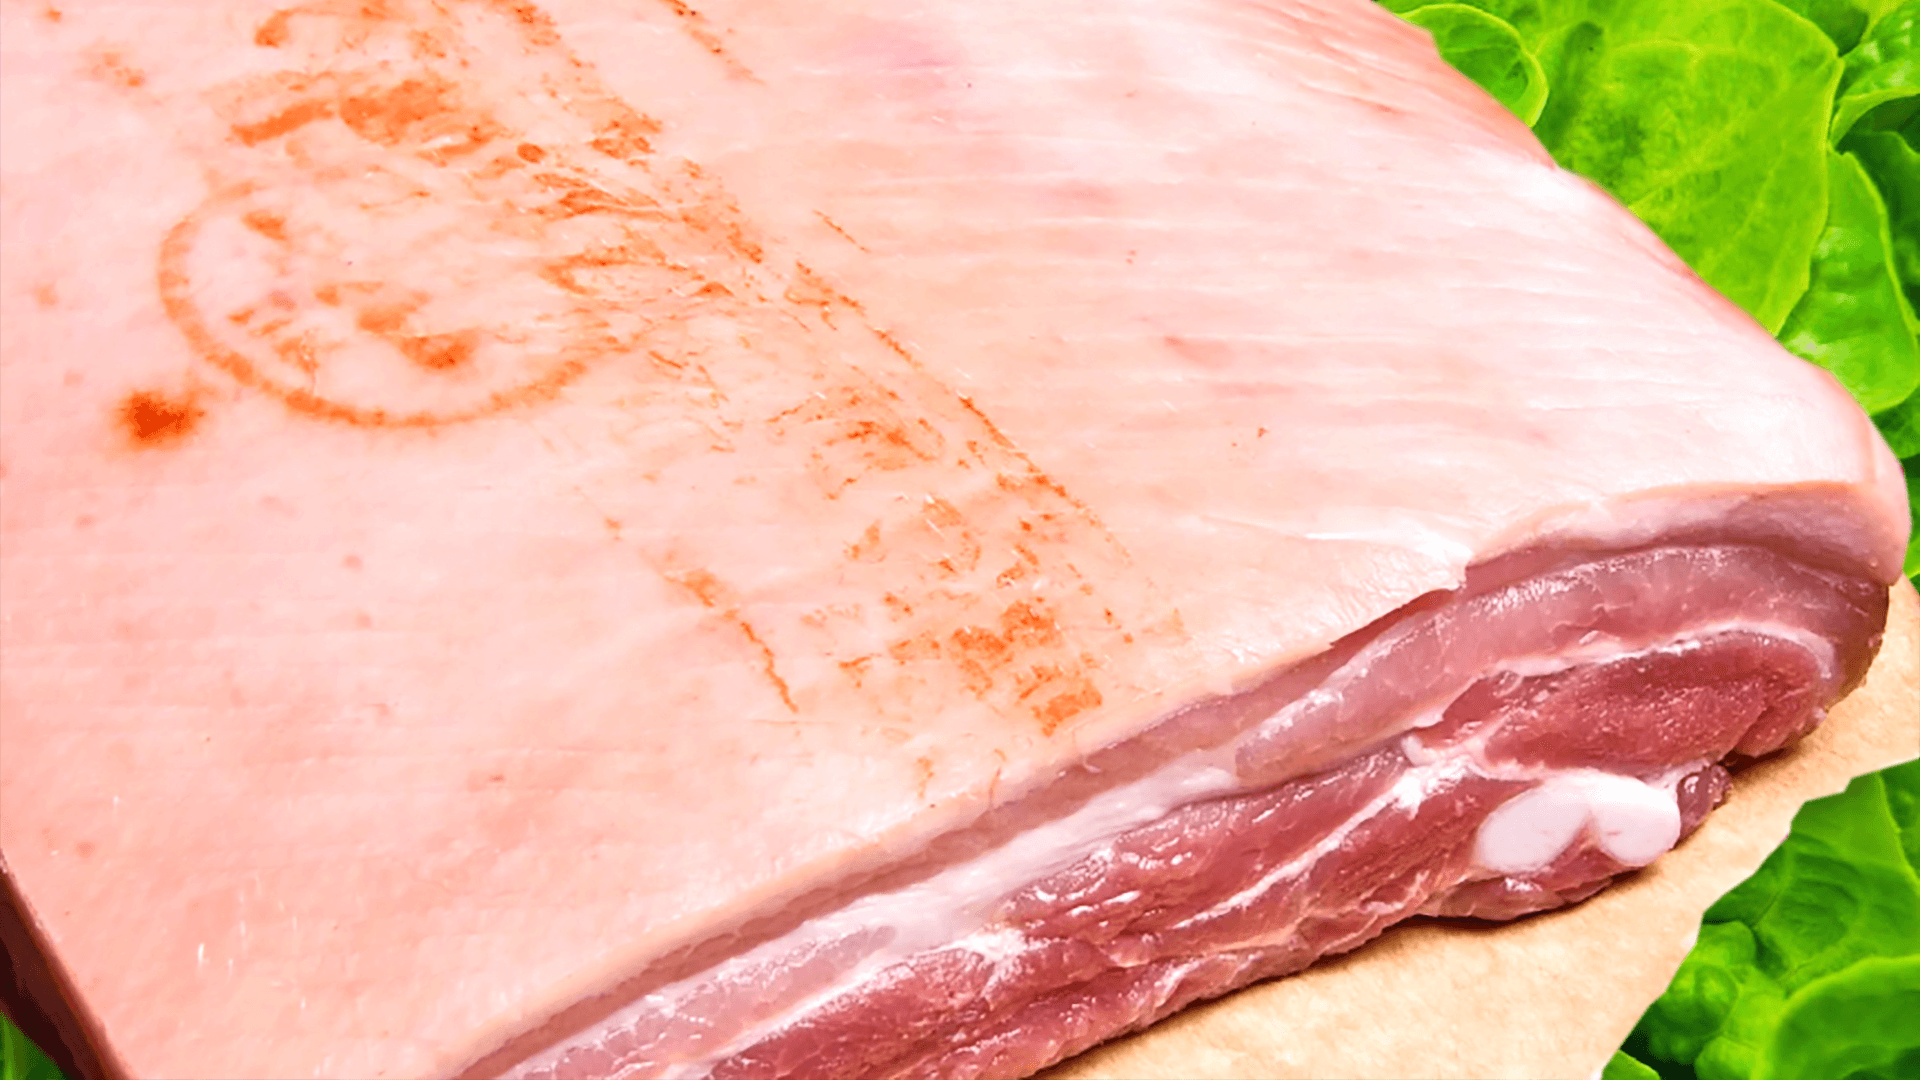 Raw Pork Belly